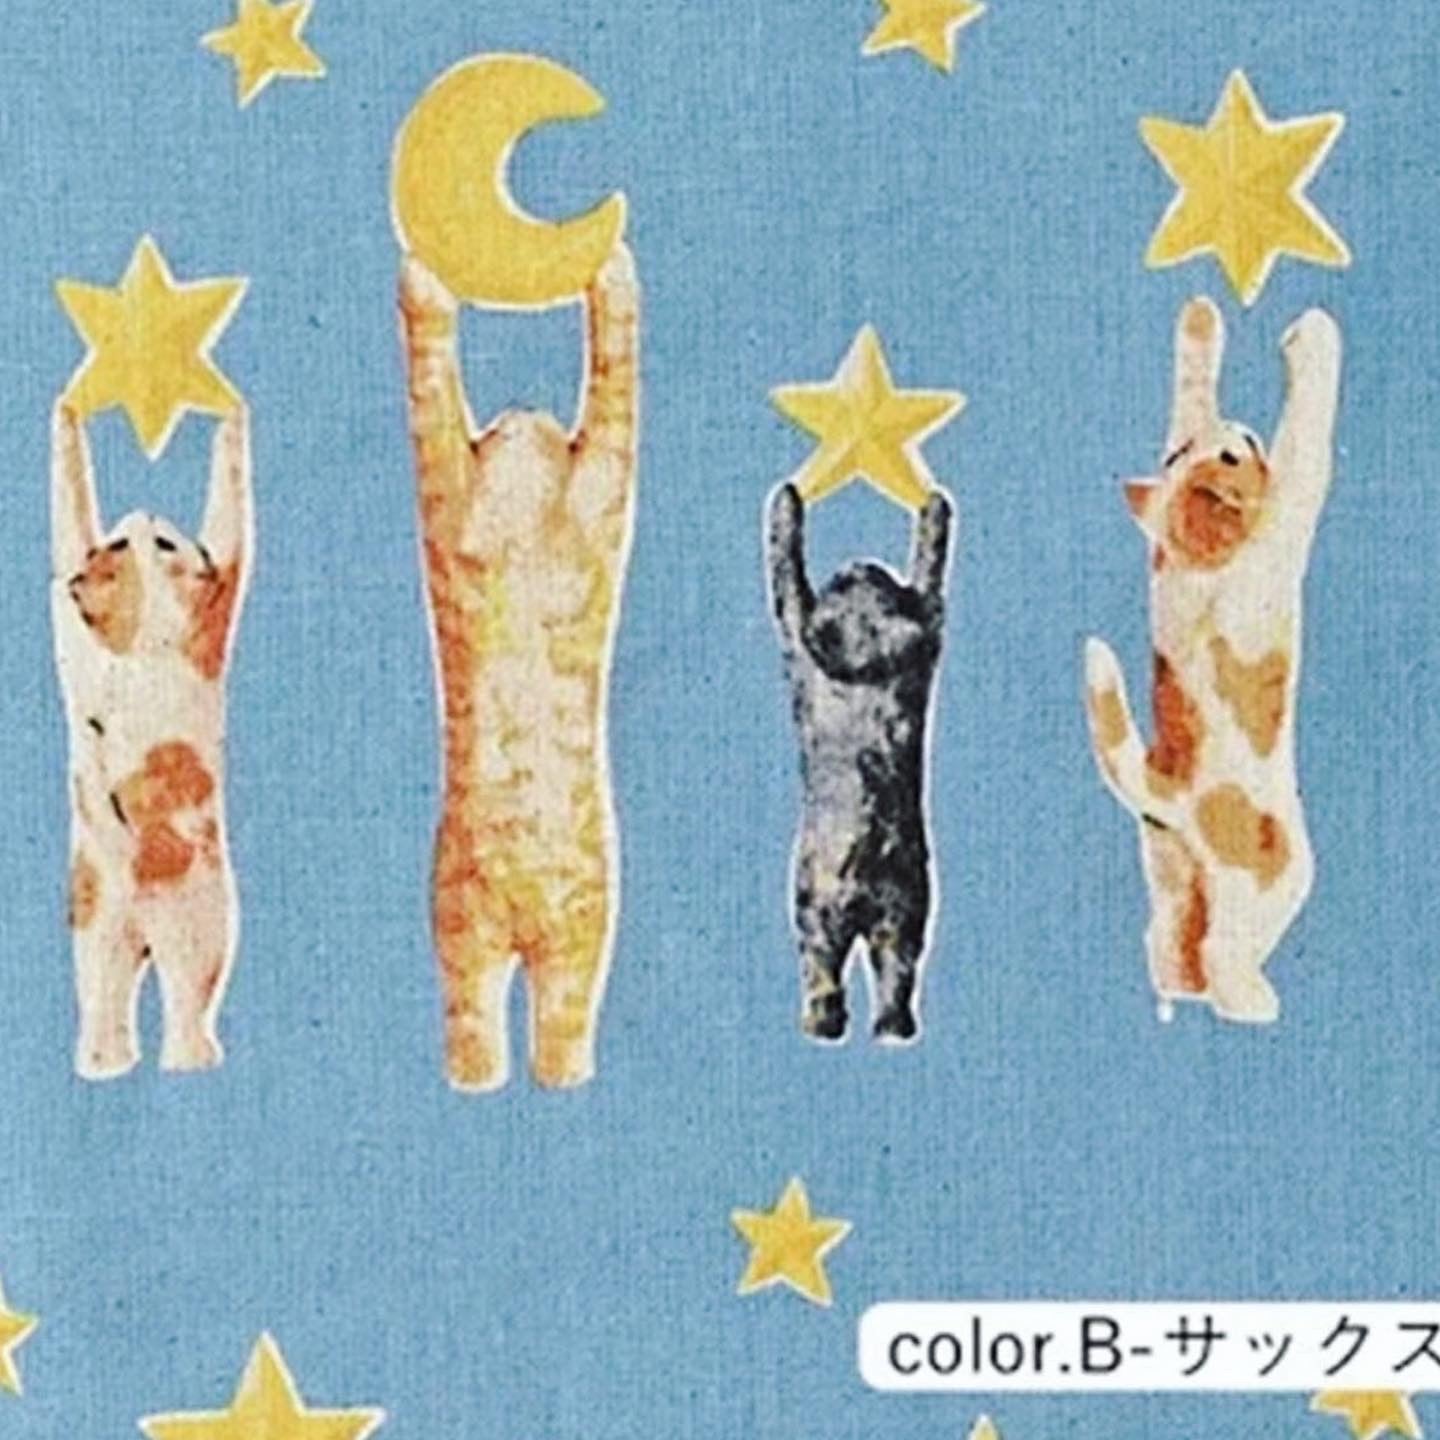 Cat chasing stars pattern one piece